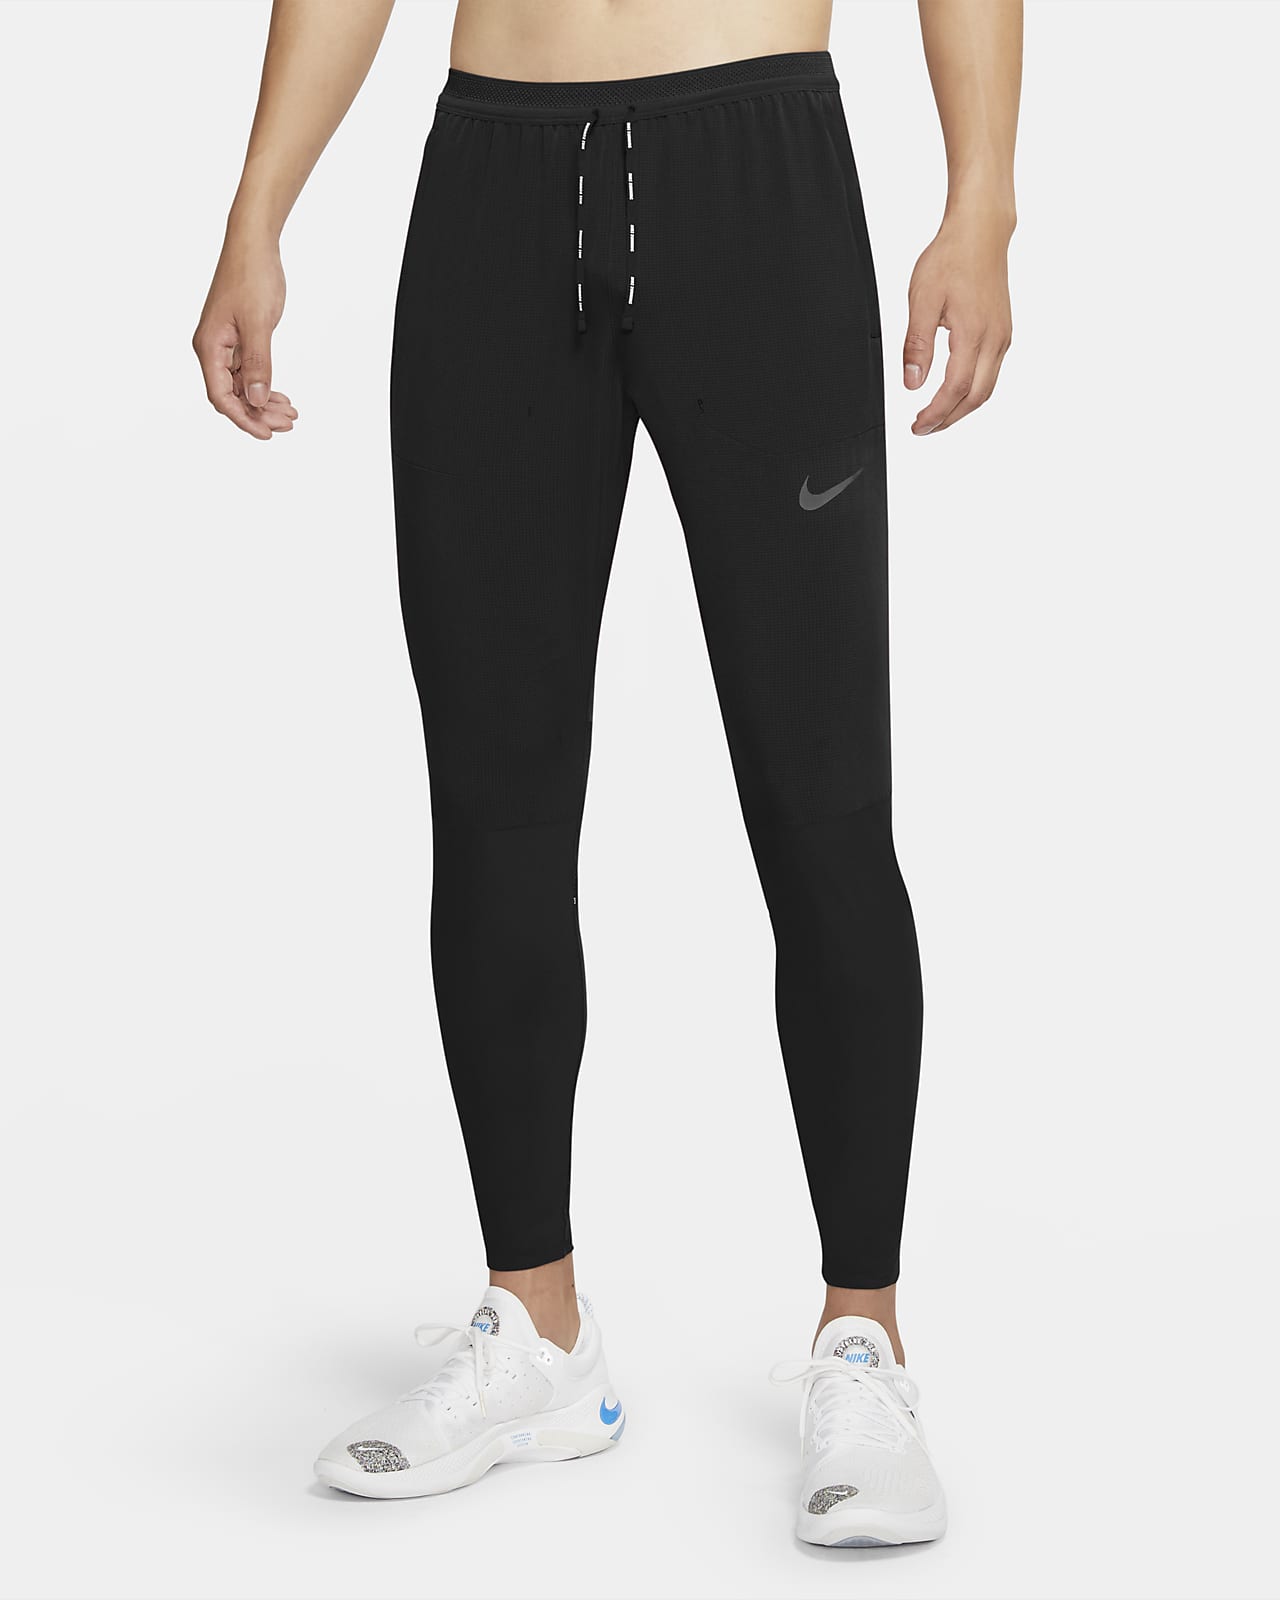 enjuague Bombardeo Enciclopedia Pantalones de running para hombre Nike Swift. Nike.com